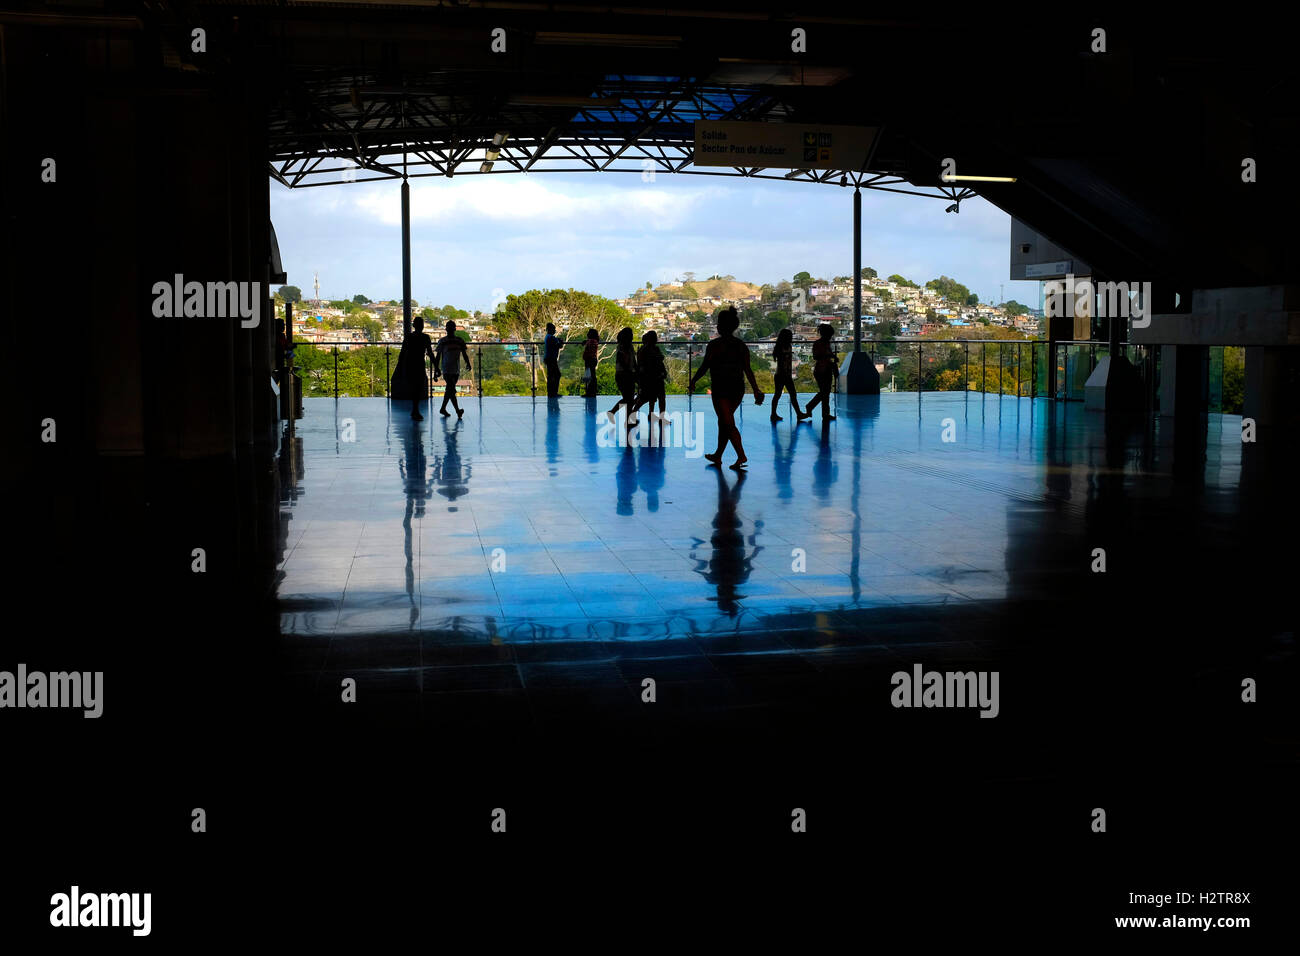 Detail im Inneren Transport Station mit Menge Passanten Silhouette Reflexion Stockfoto